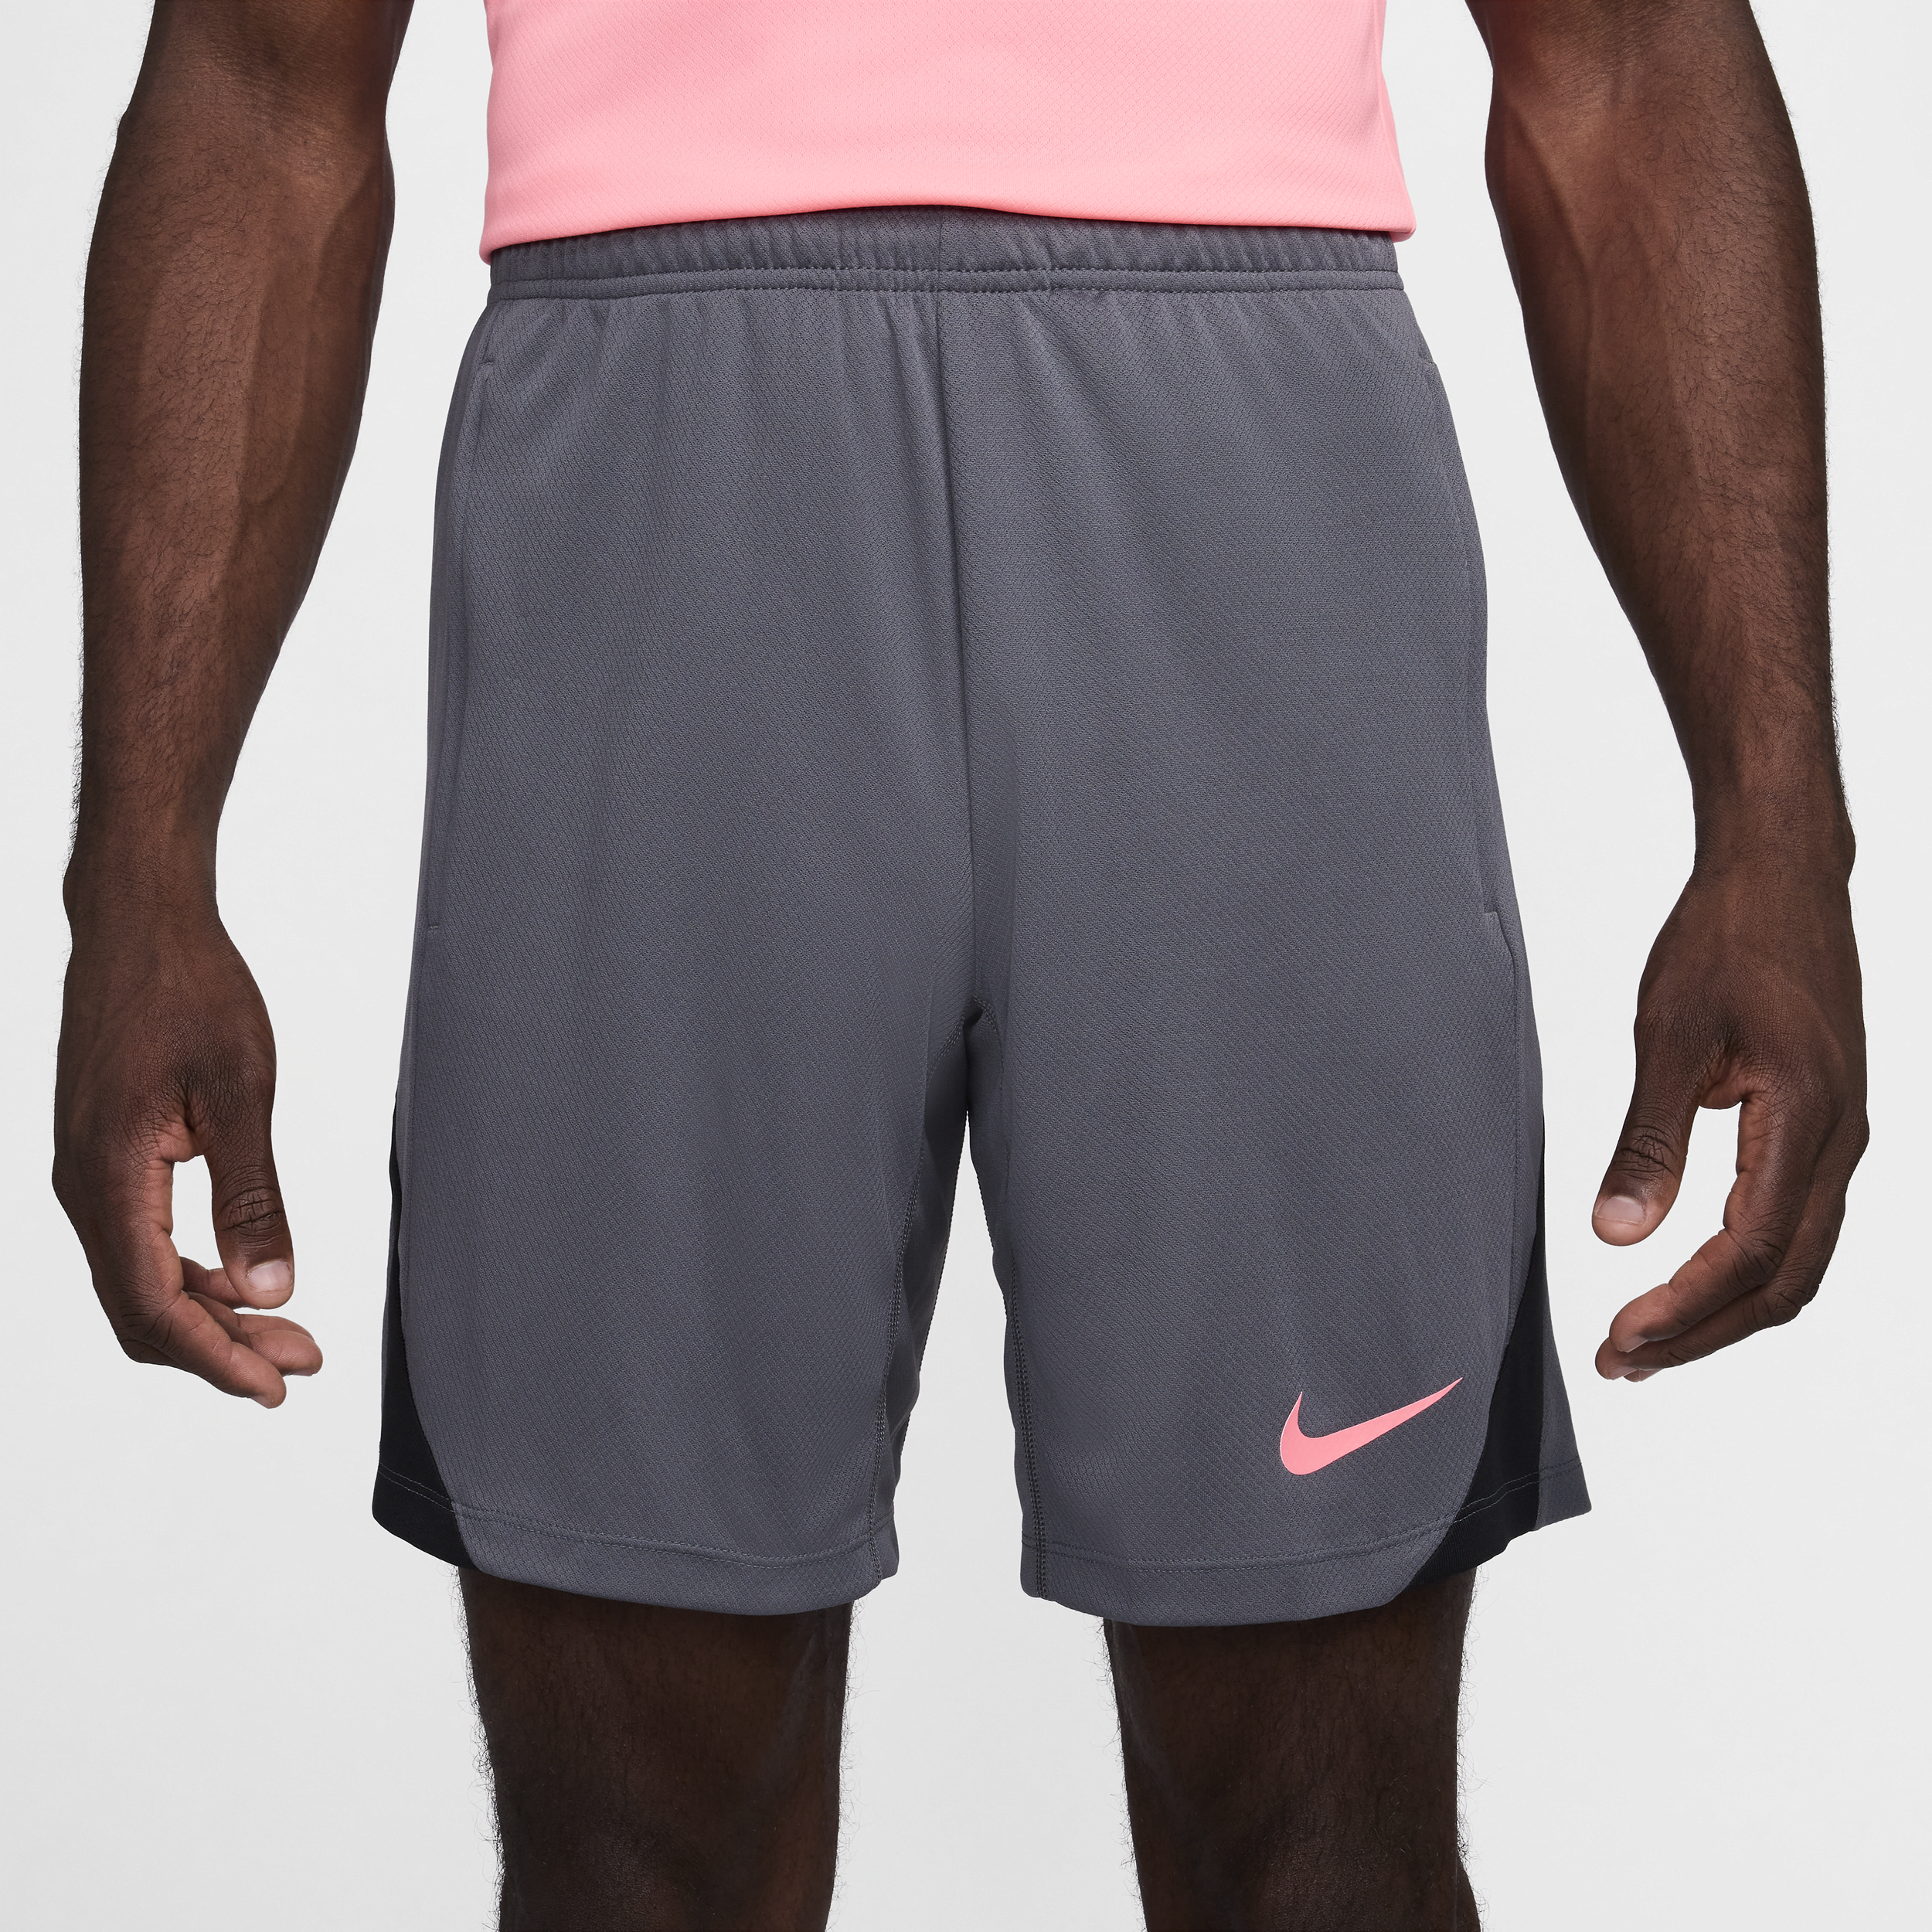 Nike Strike Dri-FIT voetbalshorts voor heren Grijs